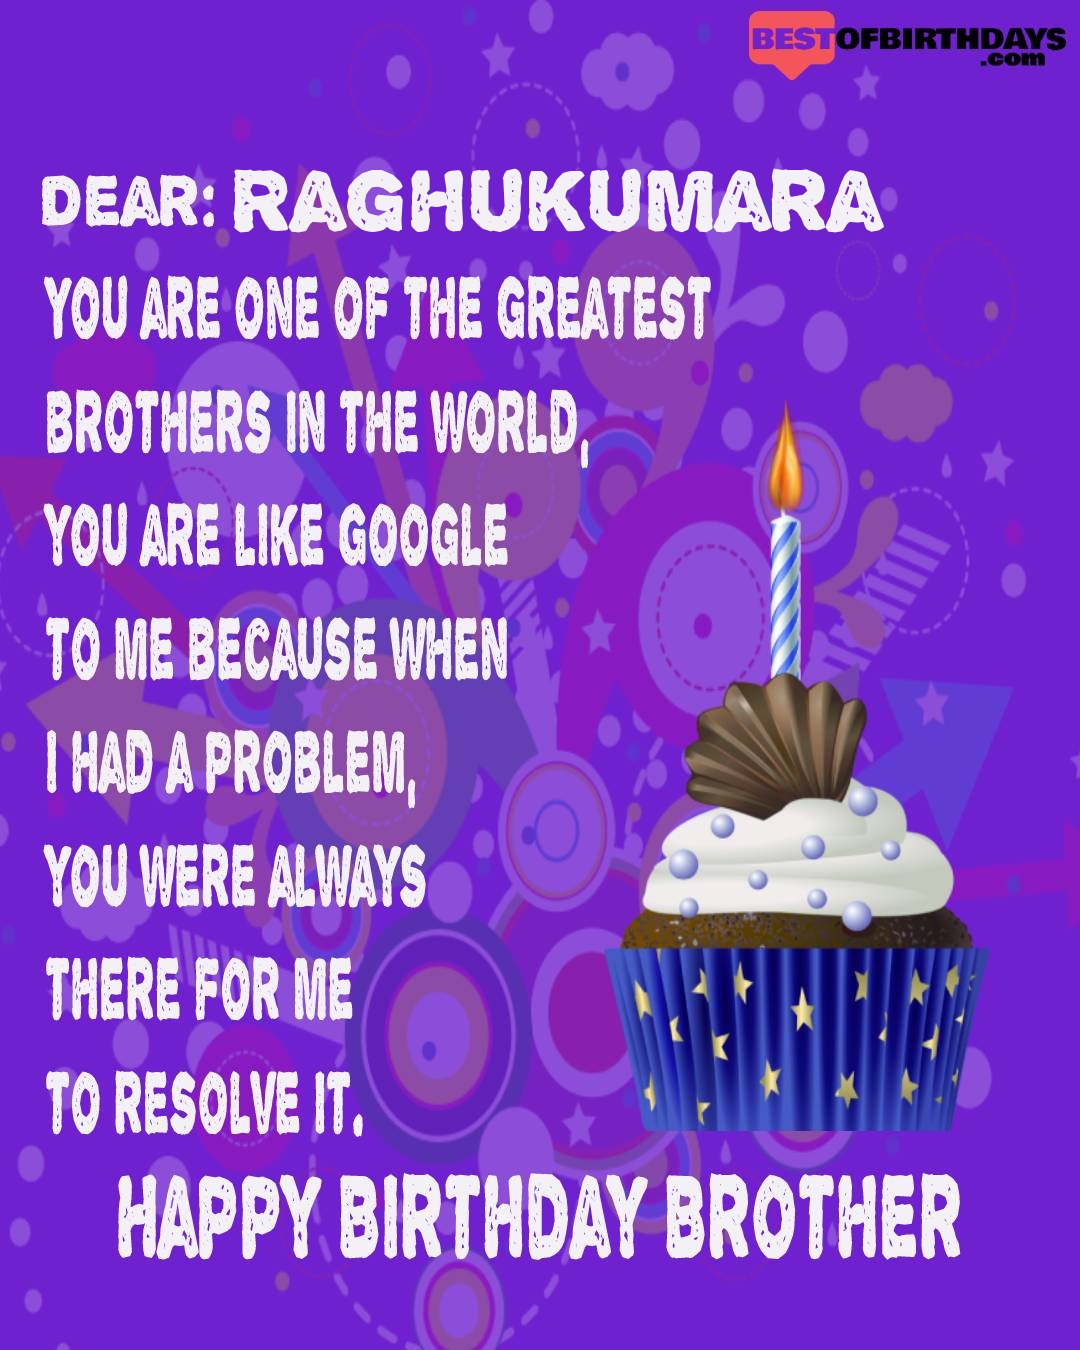 Happy birthday raghukumara bhai brother bro